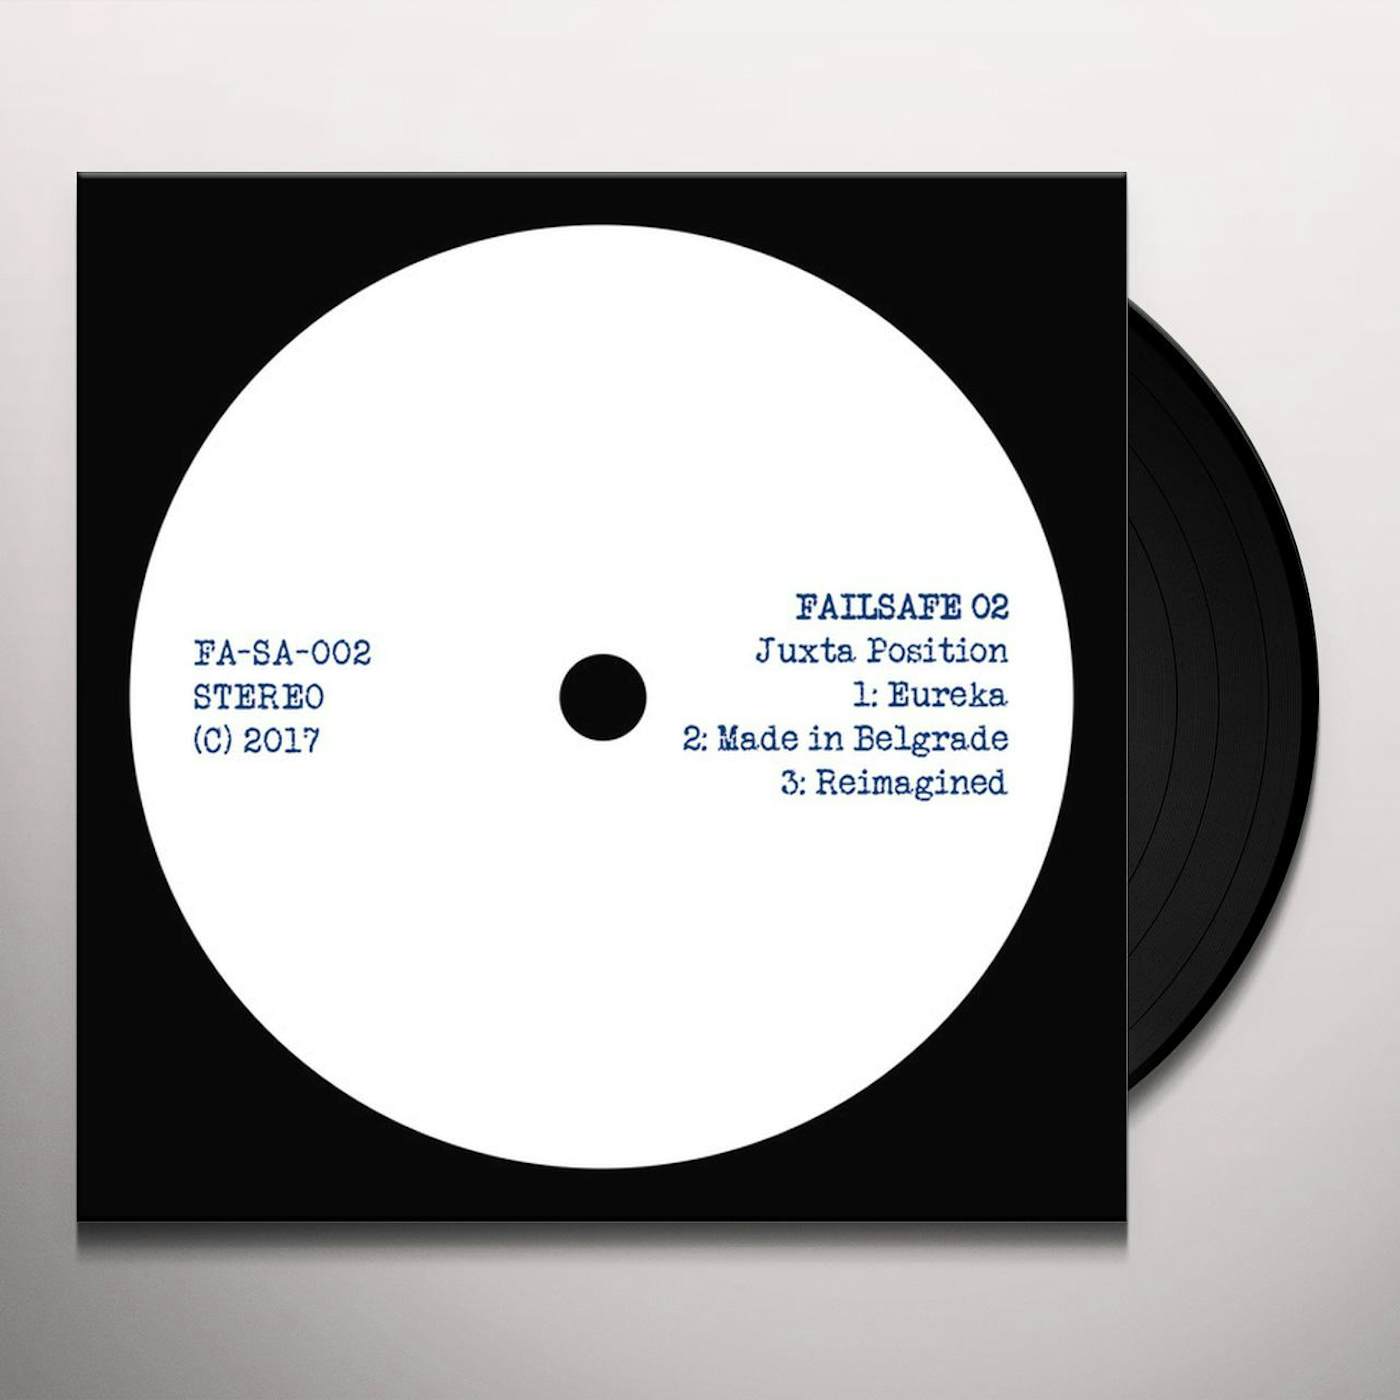 Juxta Position Failsafe 02 Vinyl Record